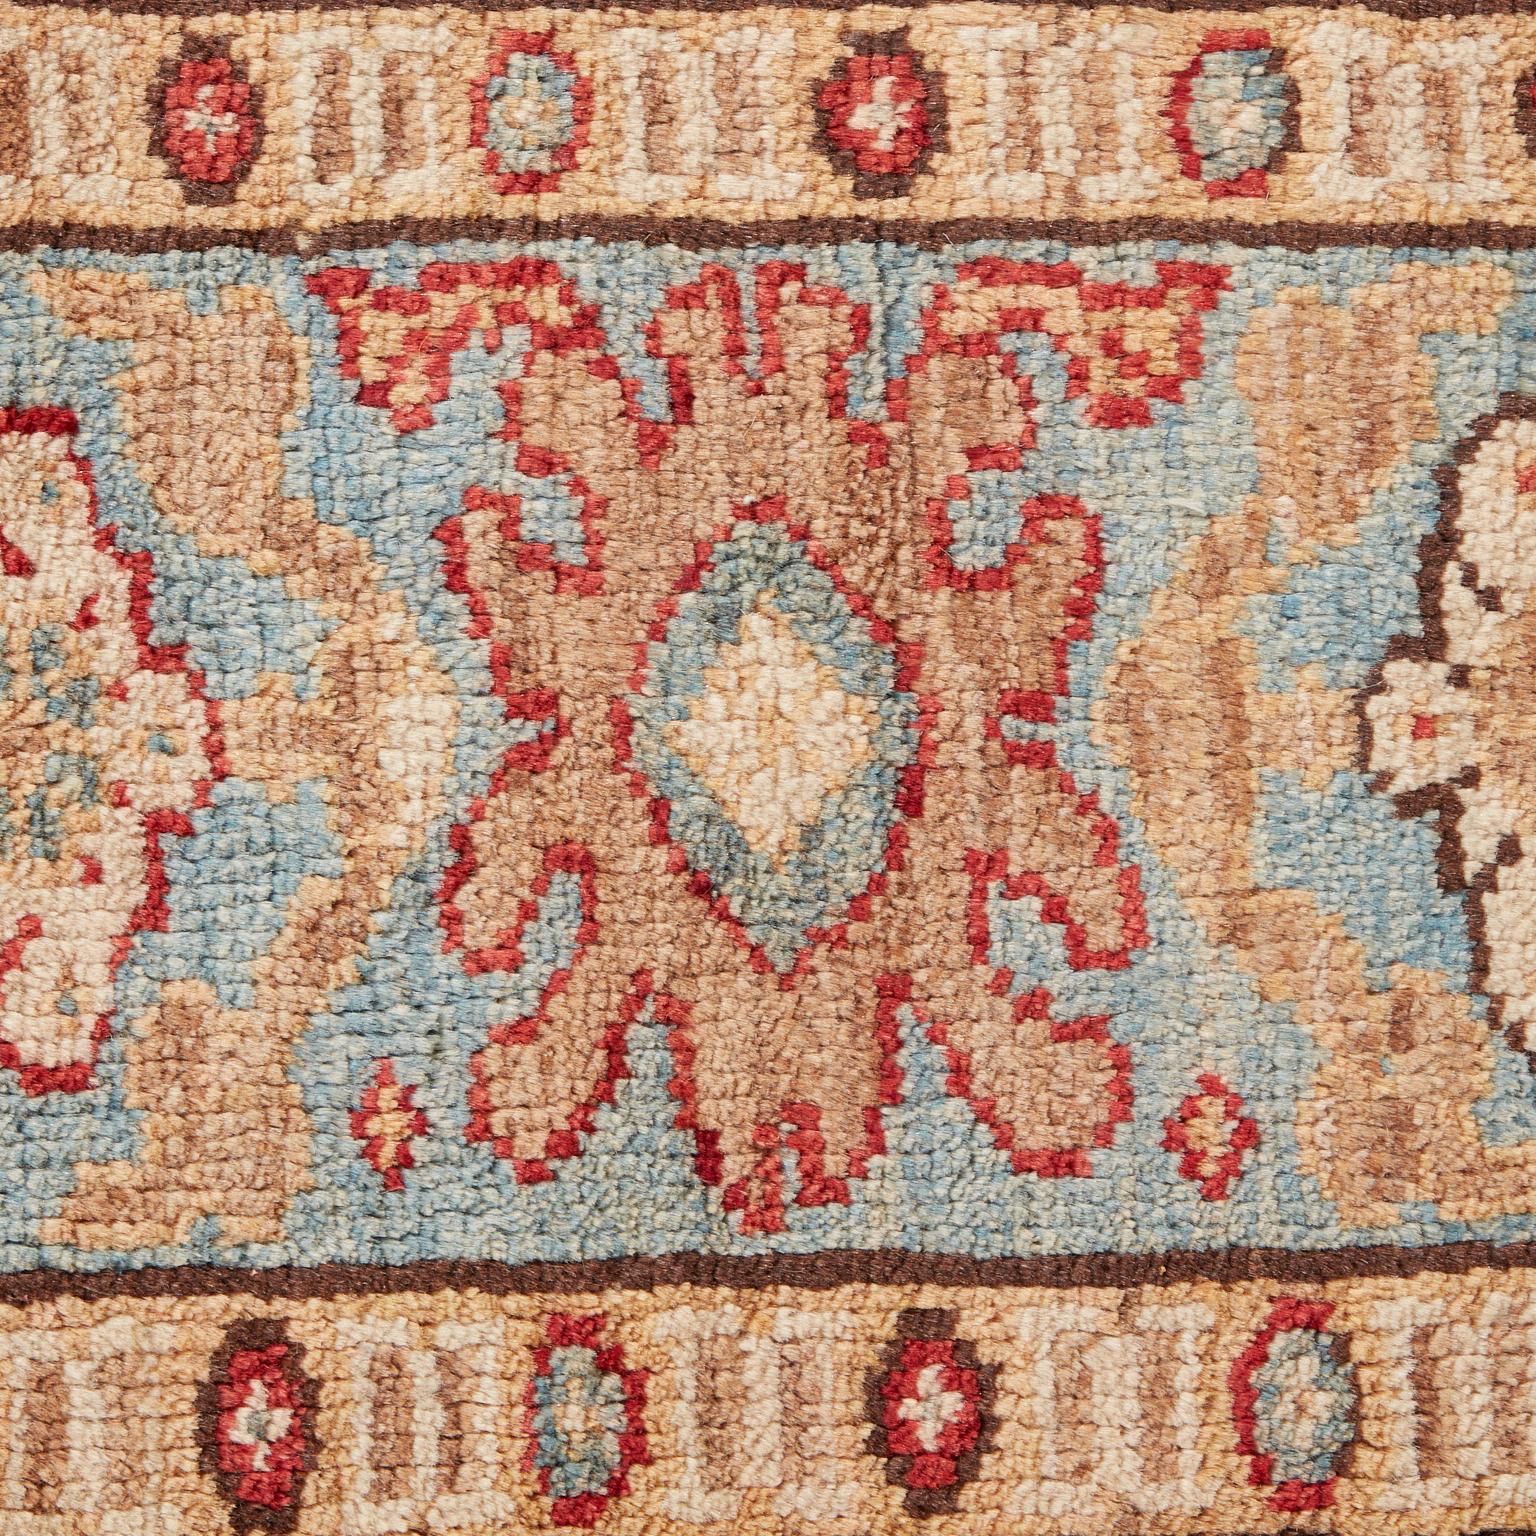 jewel toned rug